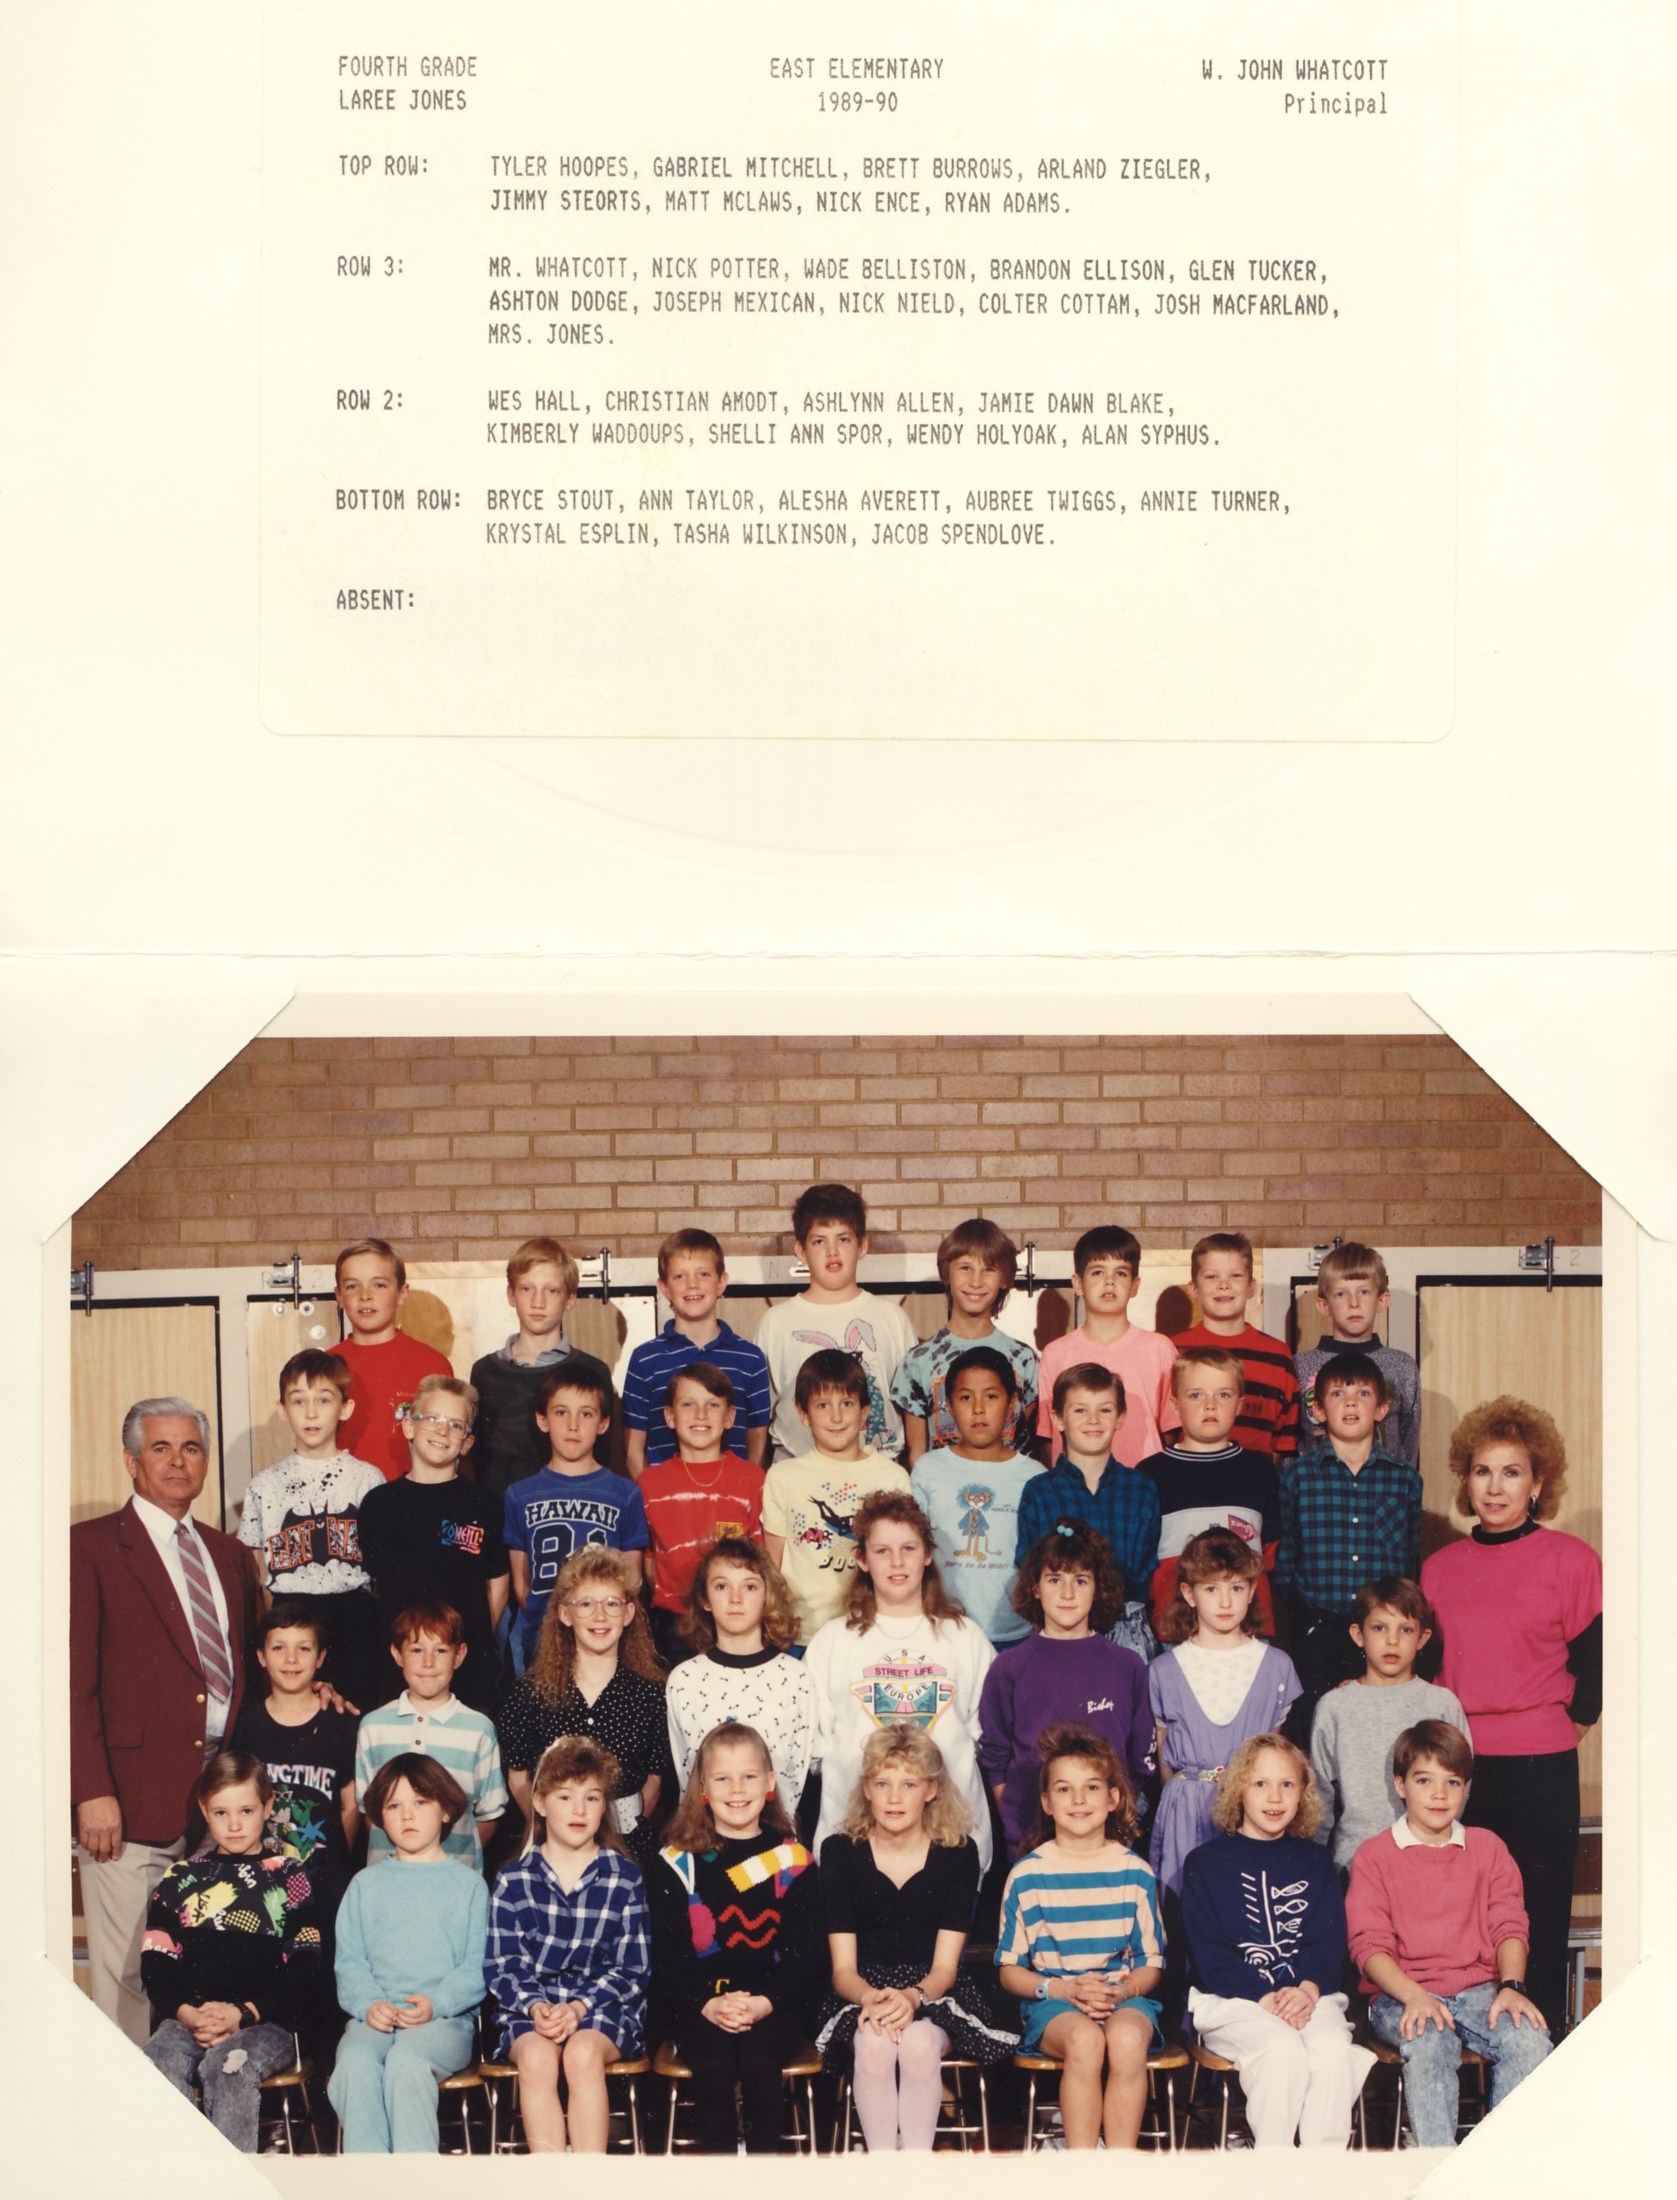 Mrs. Jones' 1989-1990 4th grade class at East Elementary School